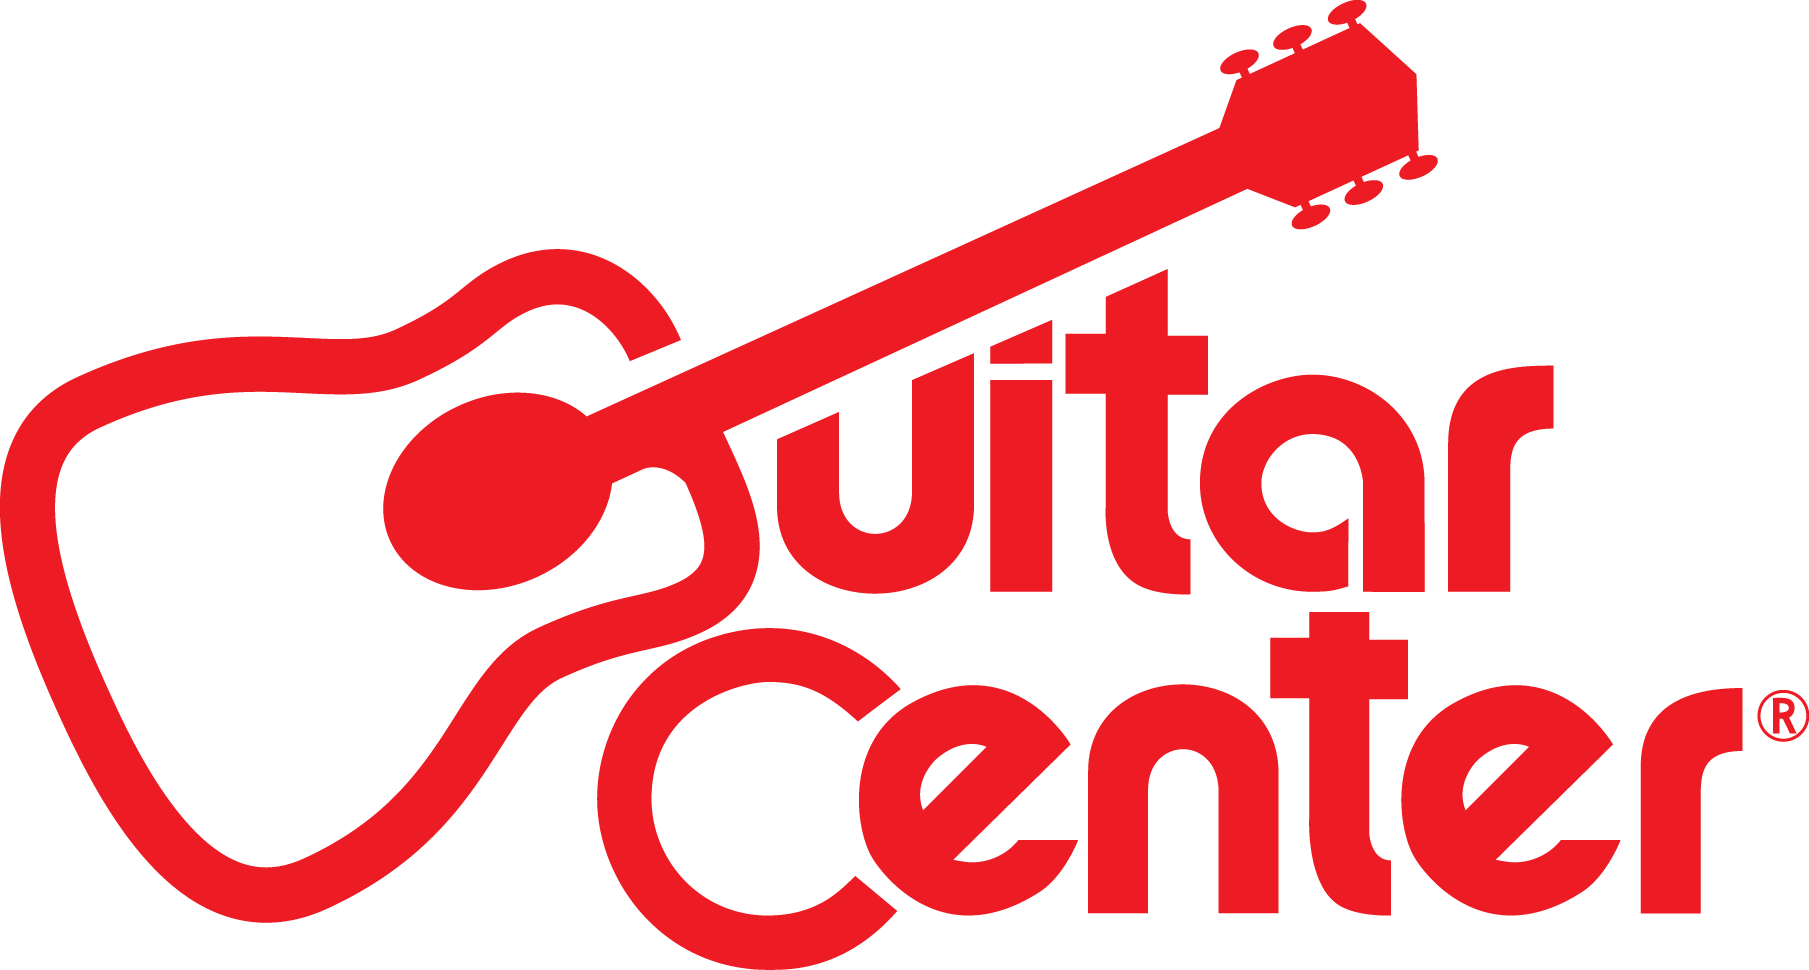 Guitar Center integration